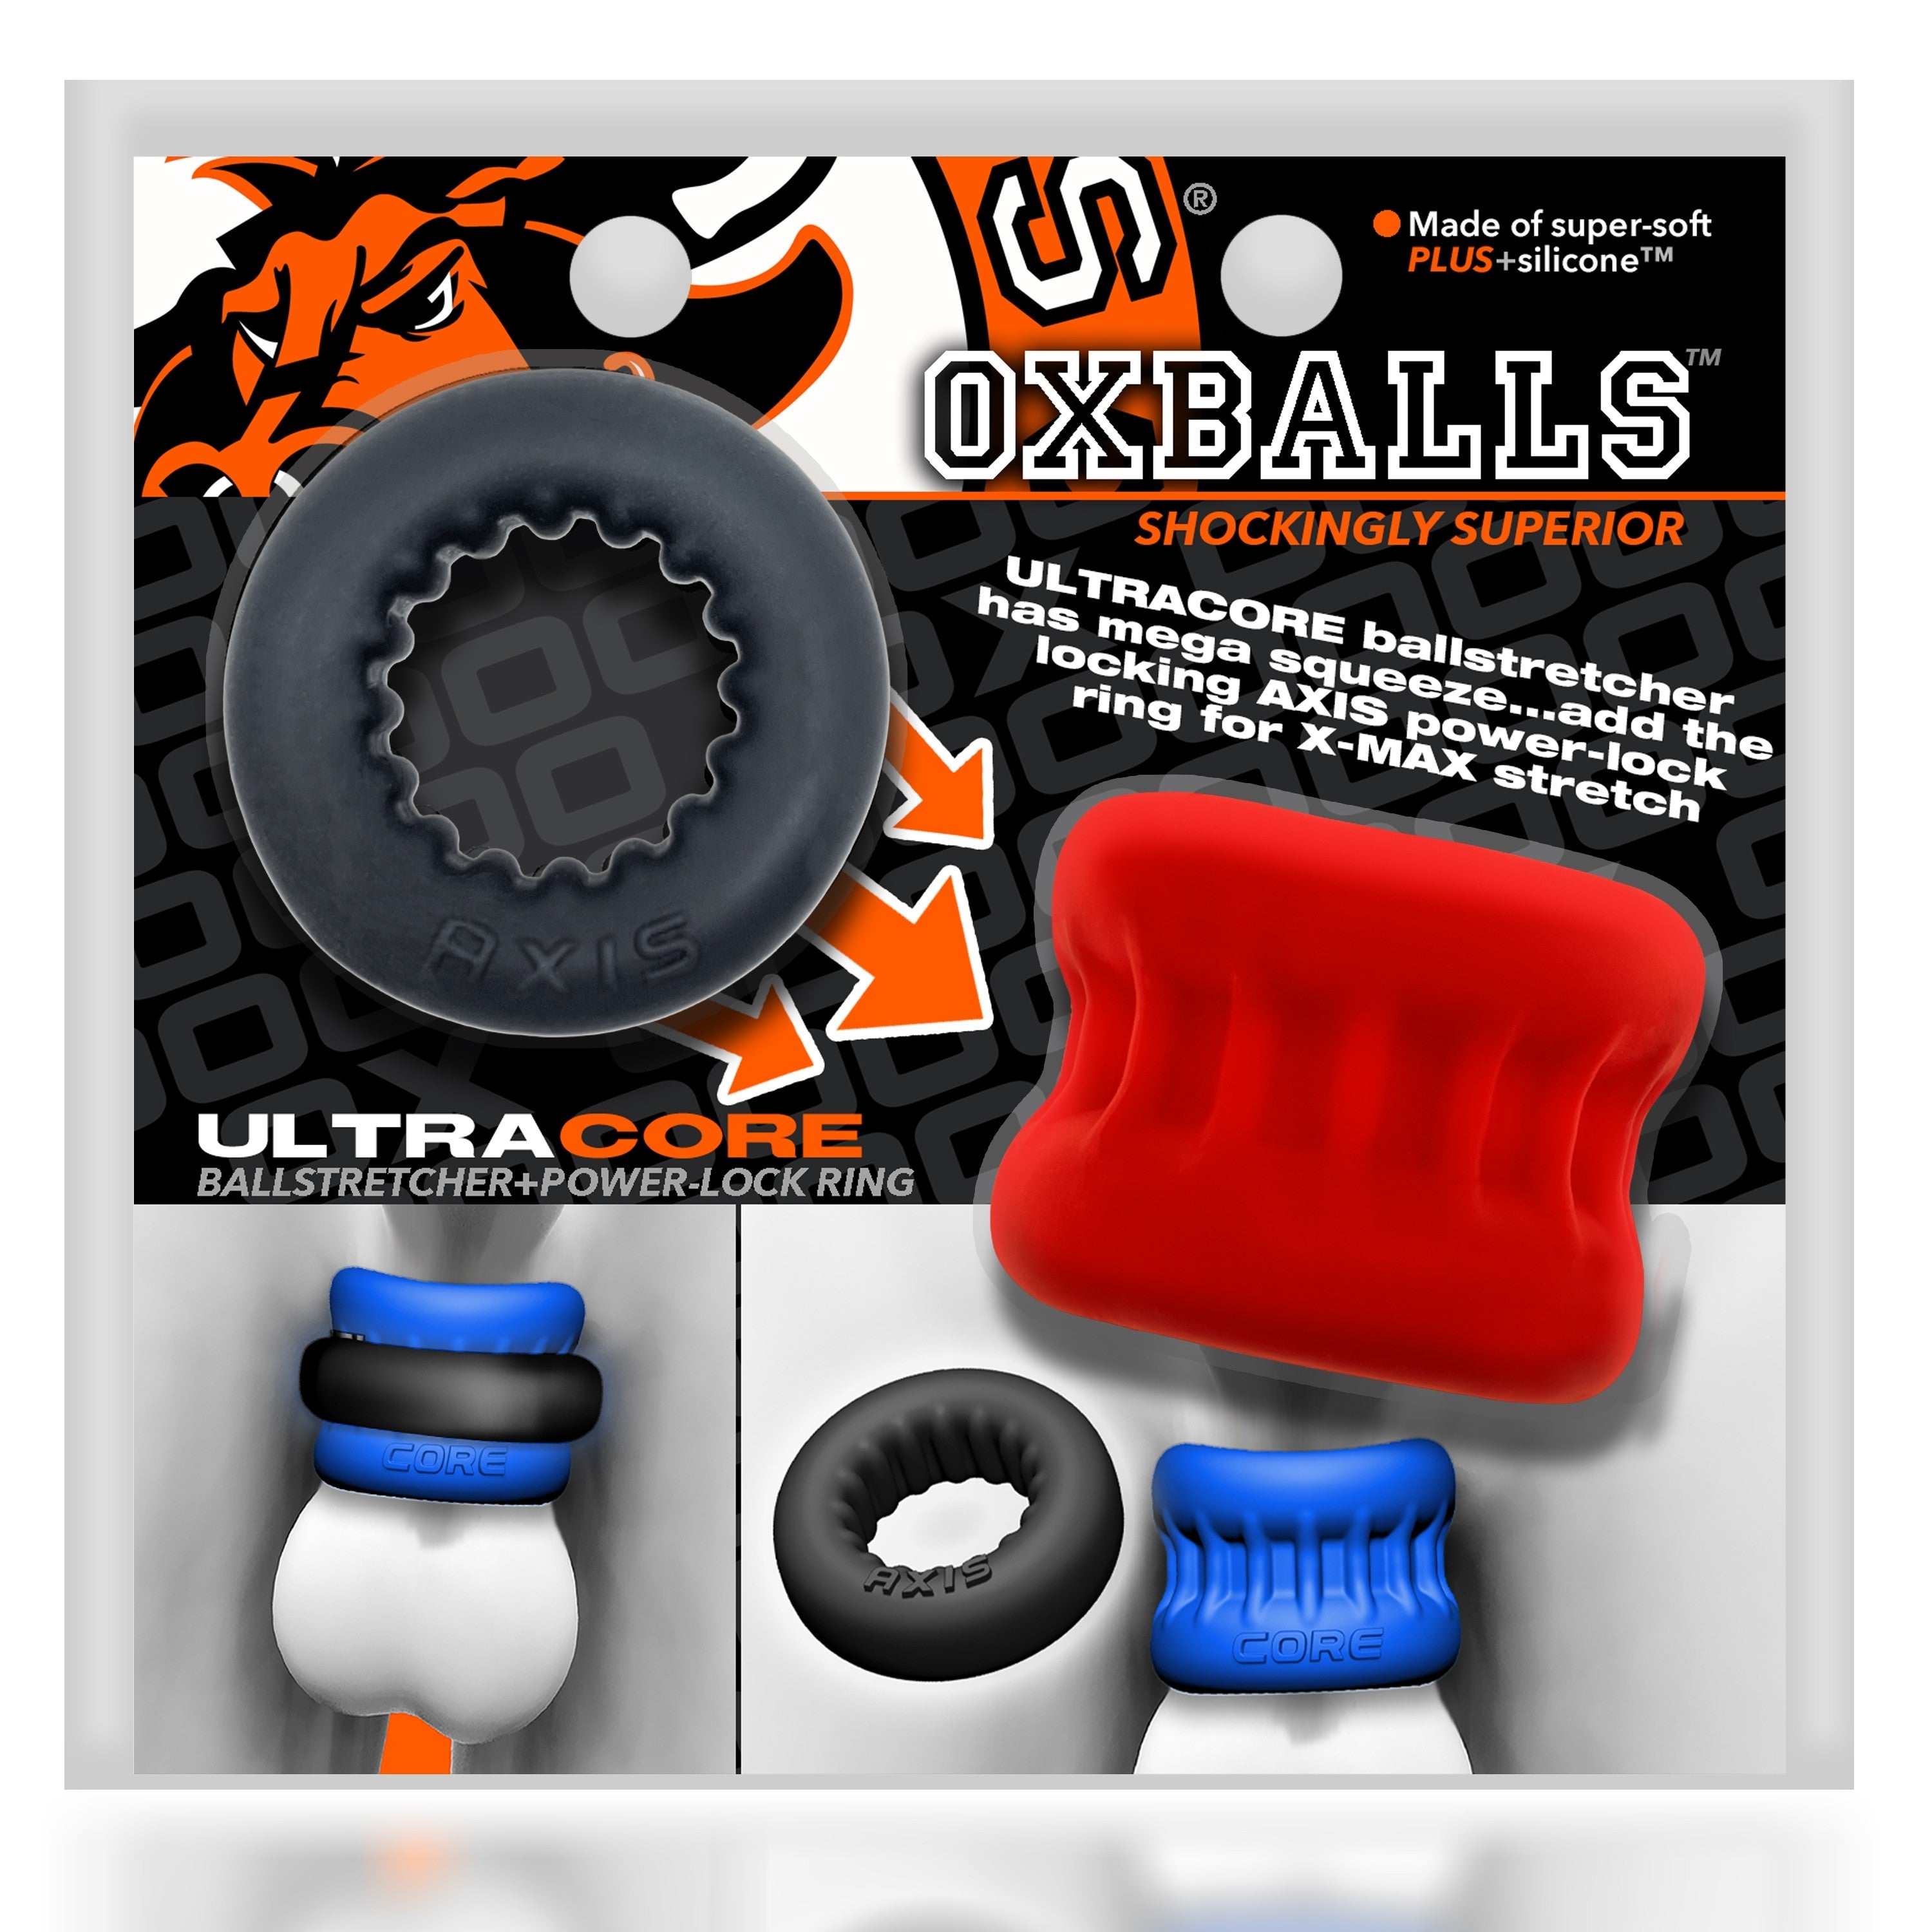 OXBALLS ULTRACORE Ballstretcher